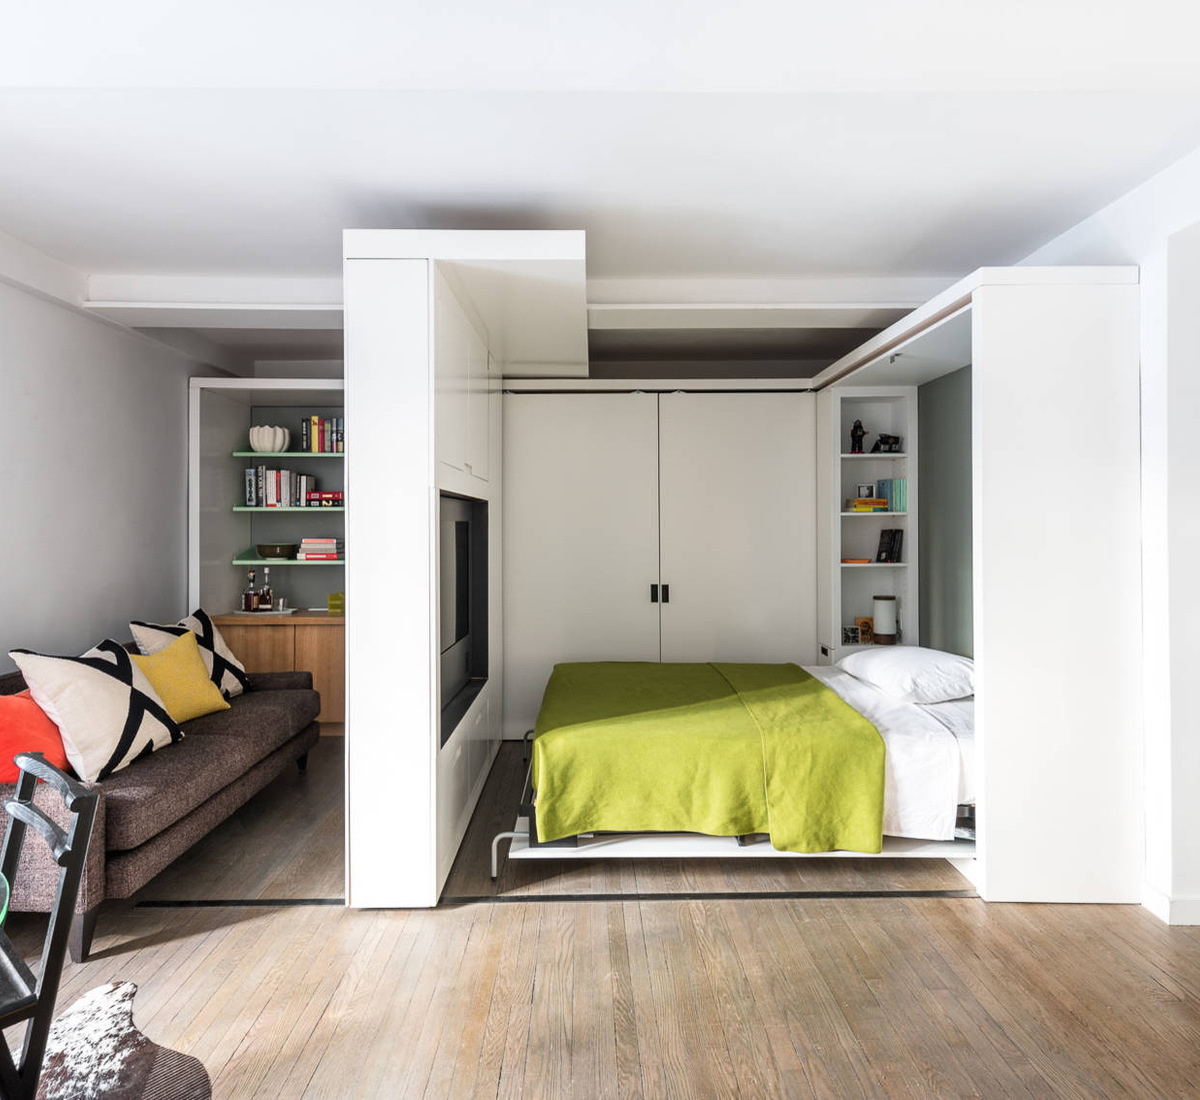 vardagsrum och sovrum i samma rumfotodesign